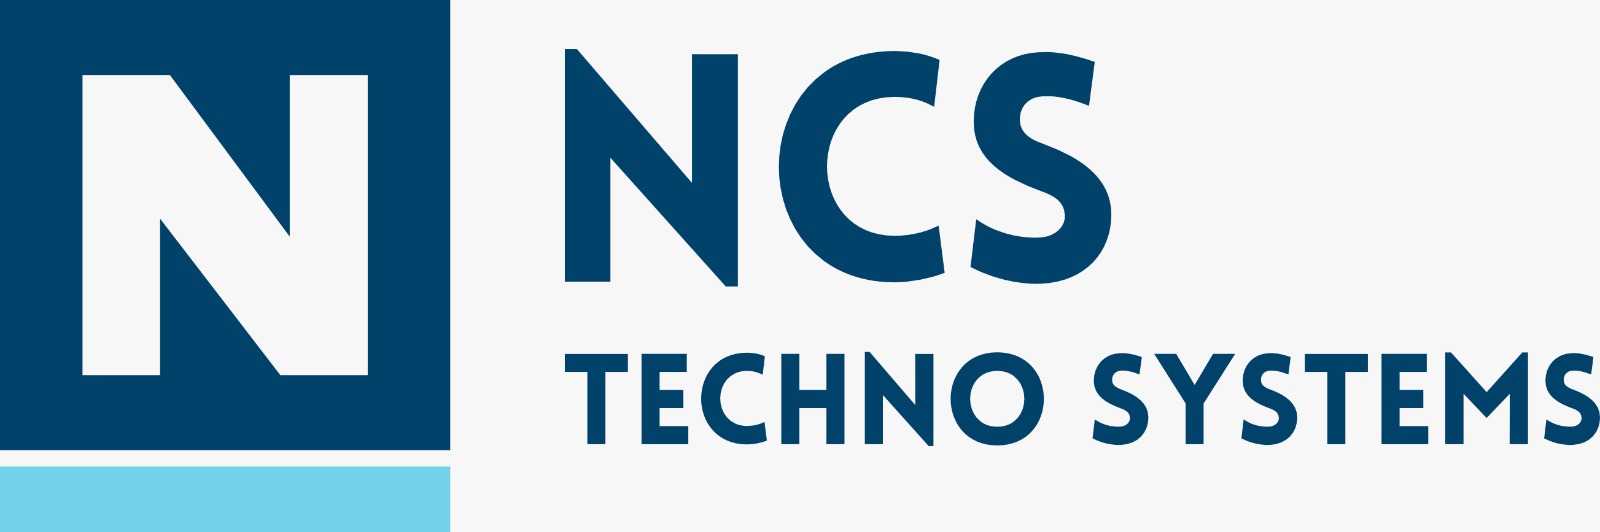  India---NCS Techno Systems Pvt Ltd